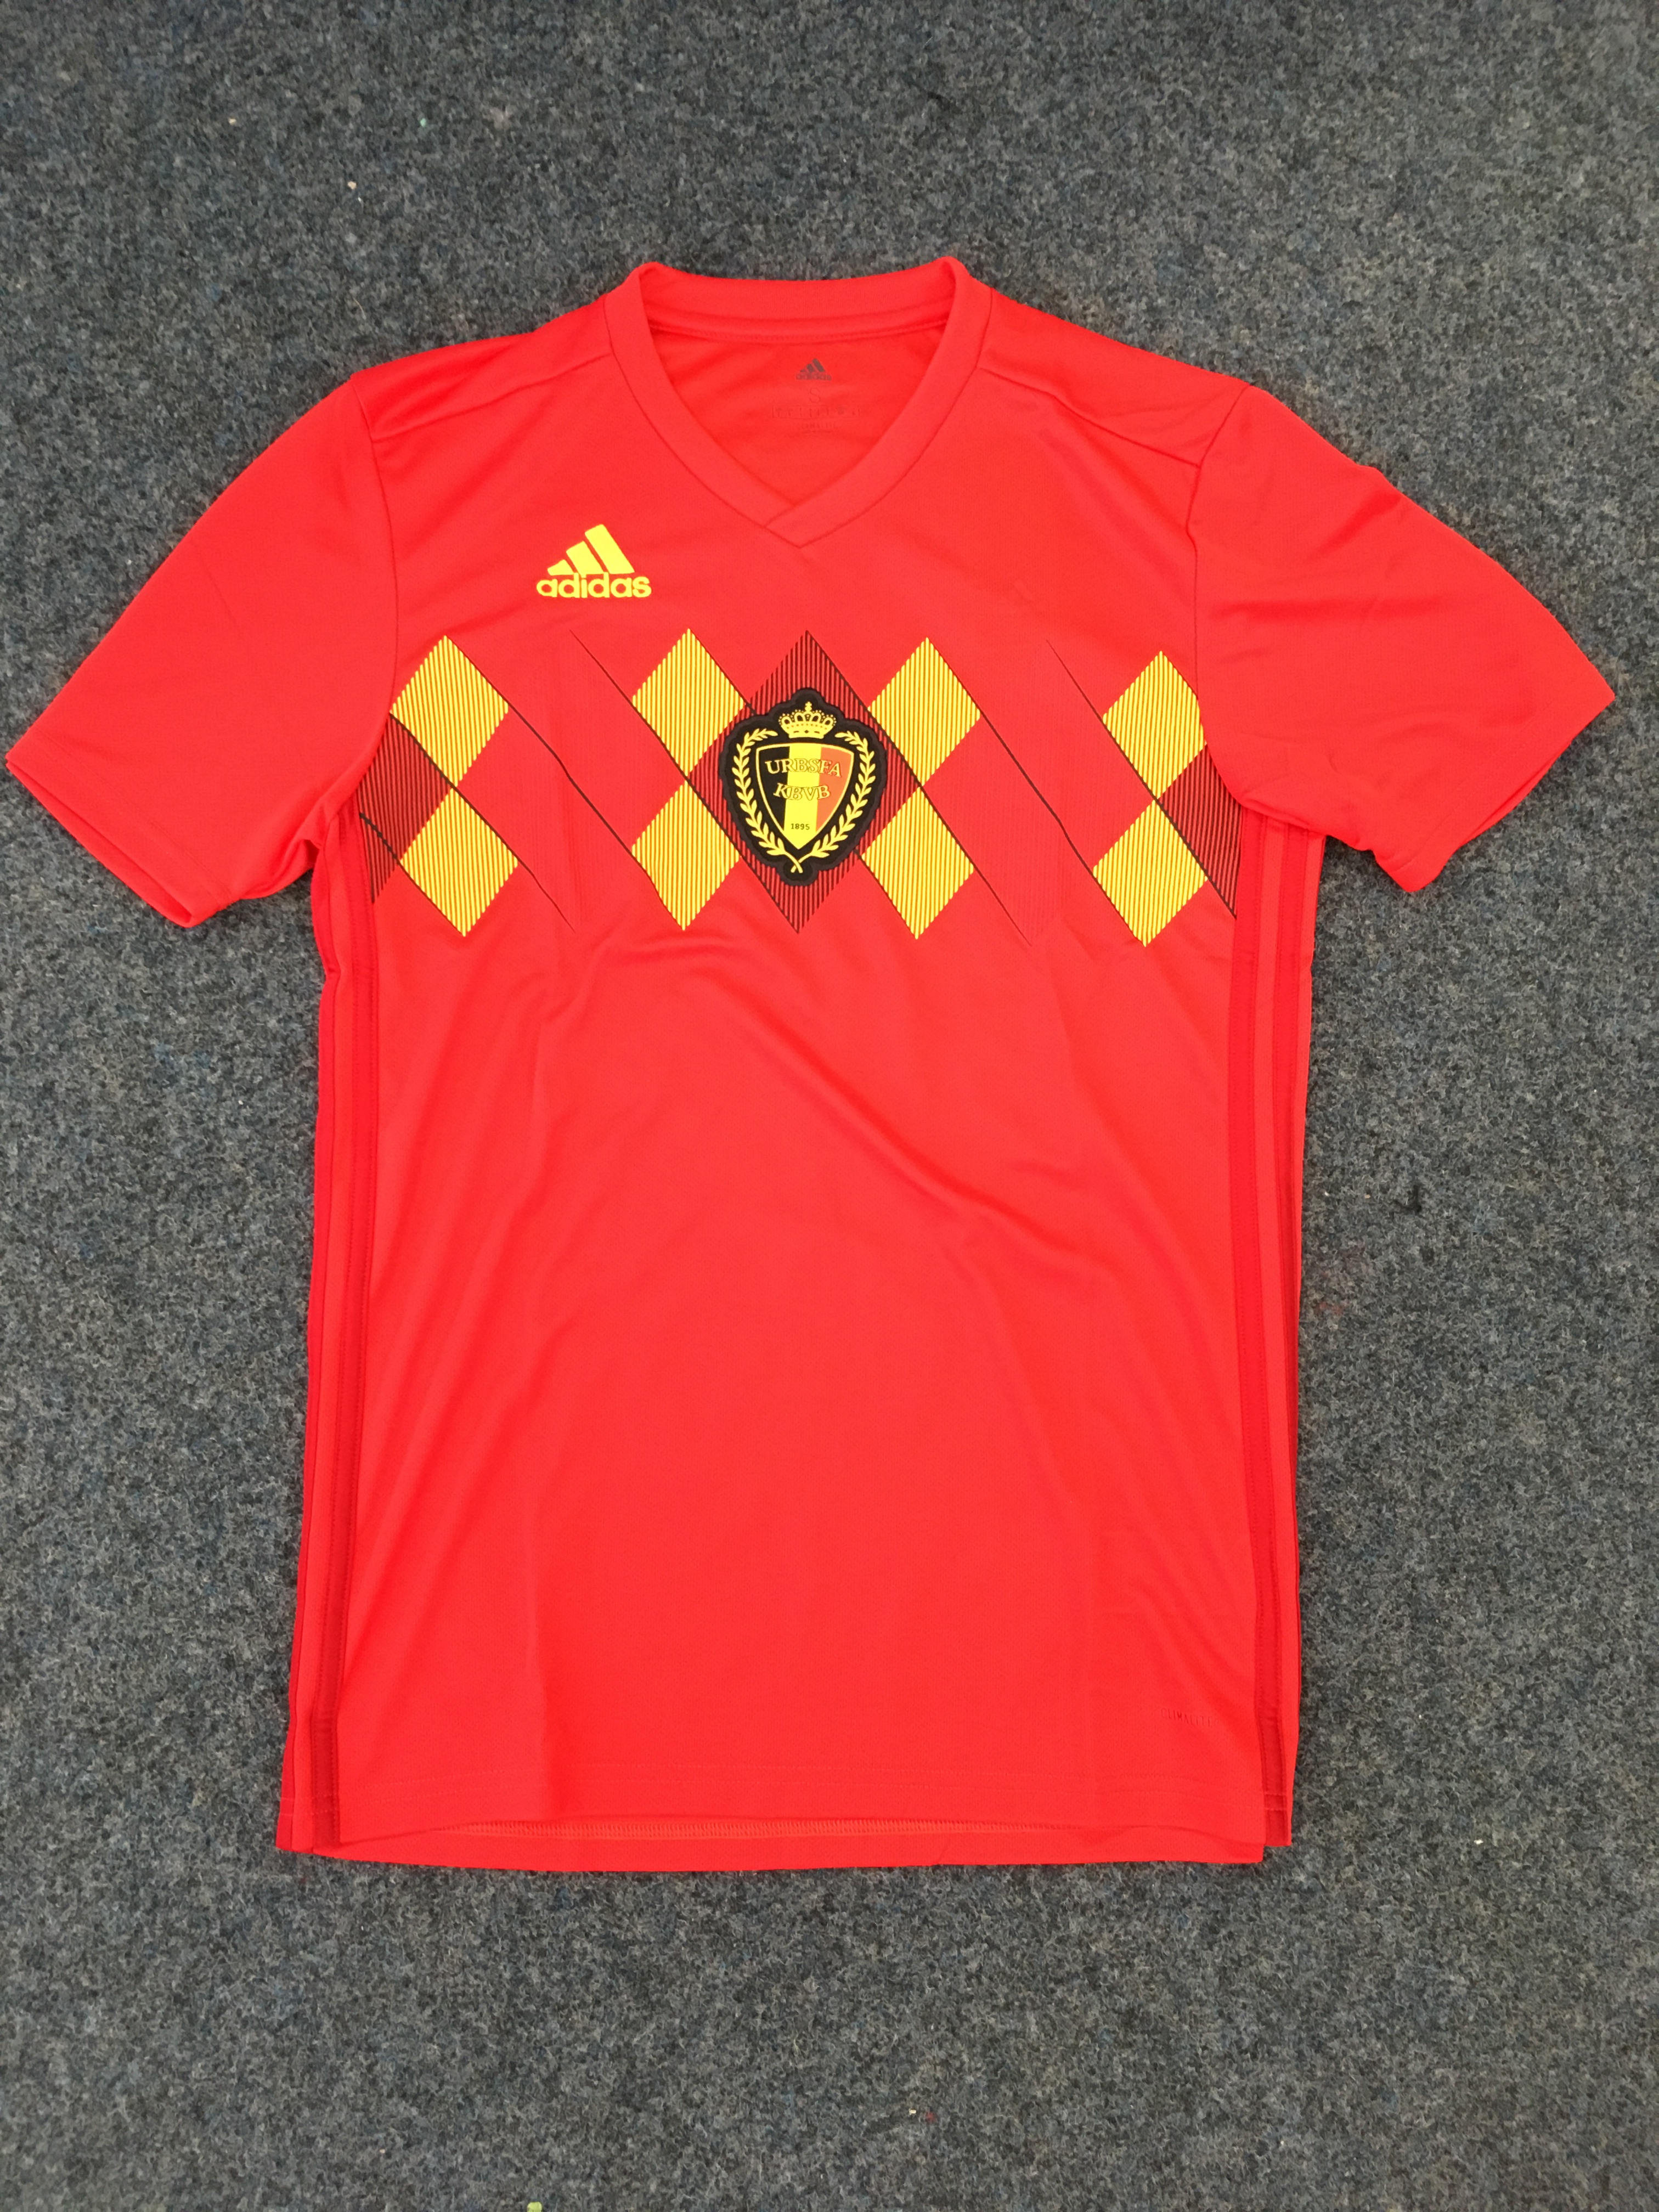 Équipe de football belge - Vareuse rouge 2018